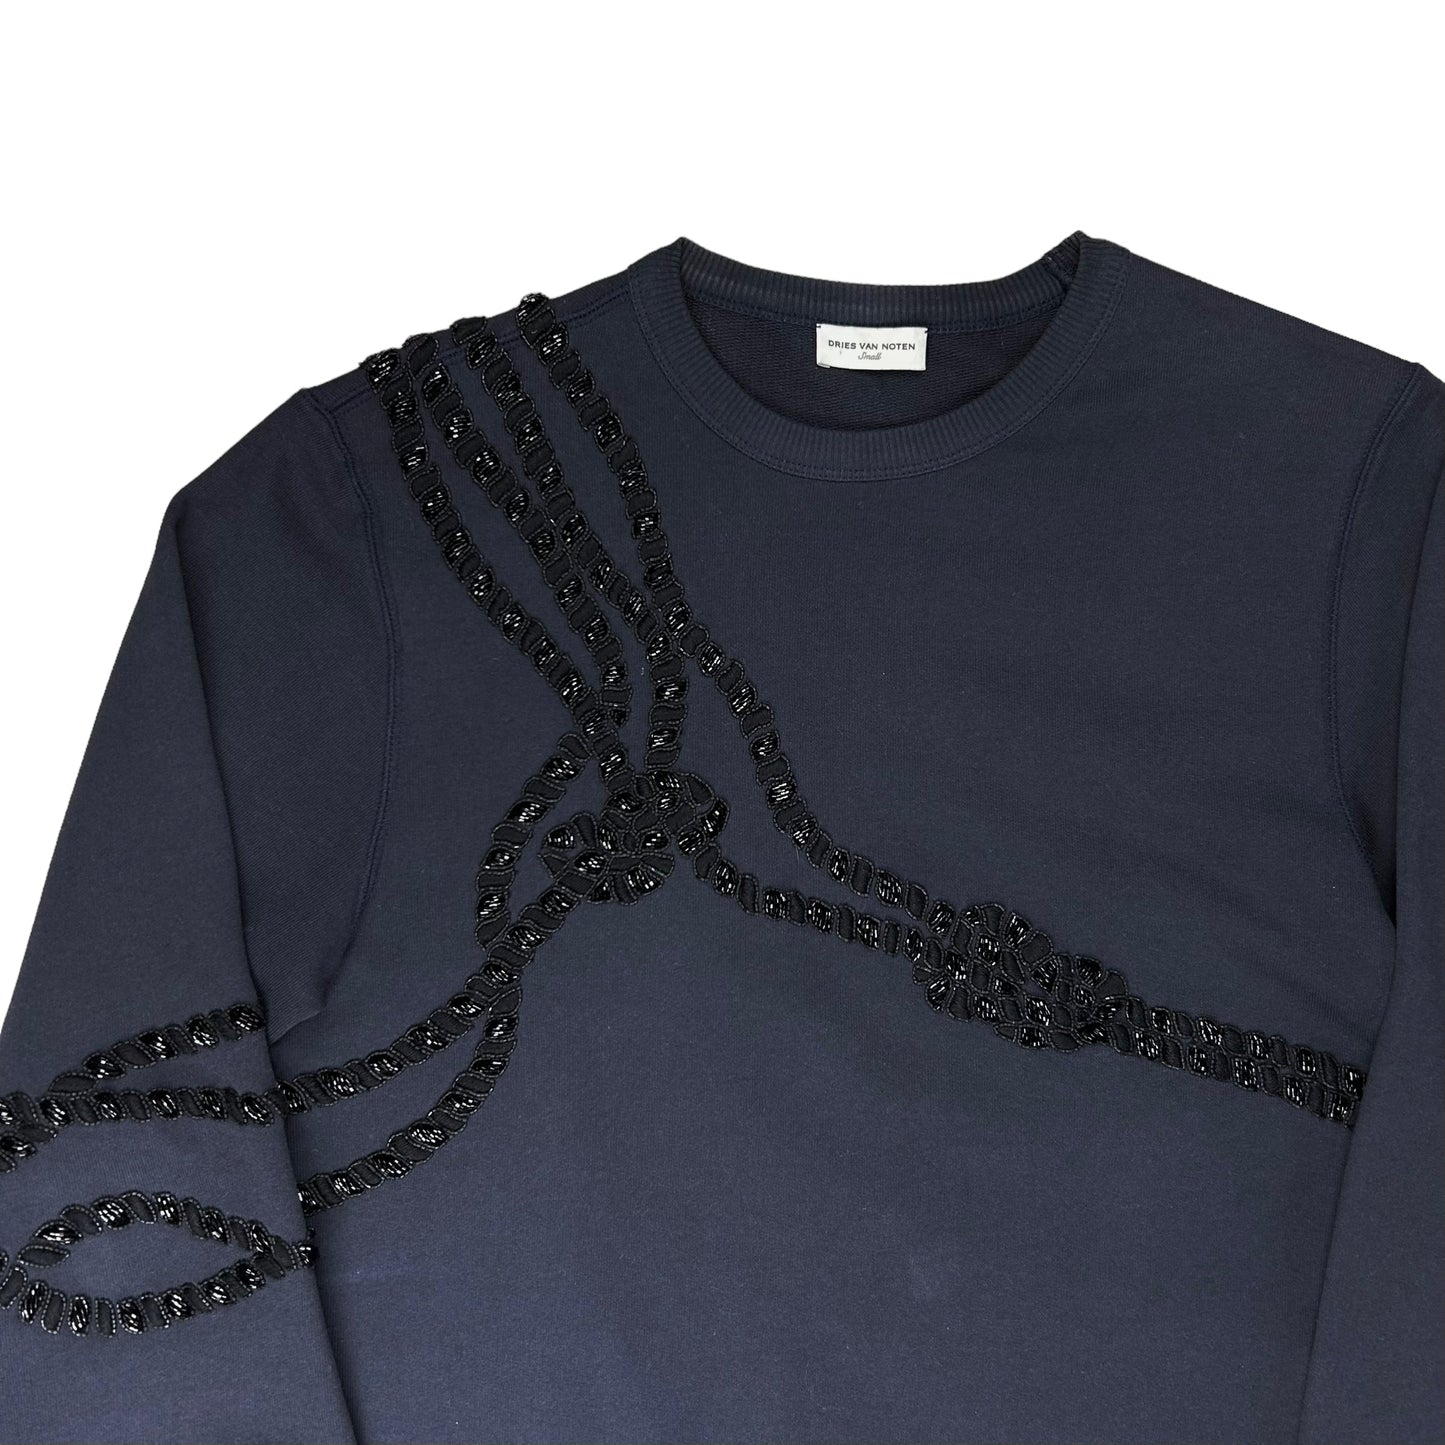 Dries Van Noten Embellished Rope Sweater - AW16